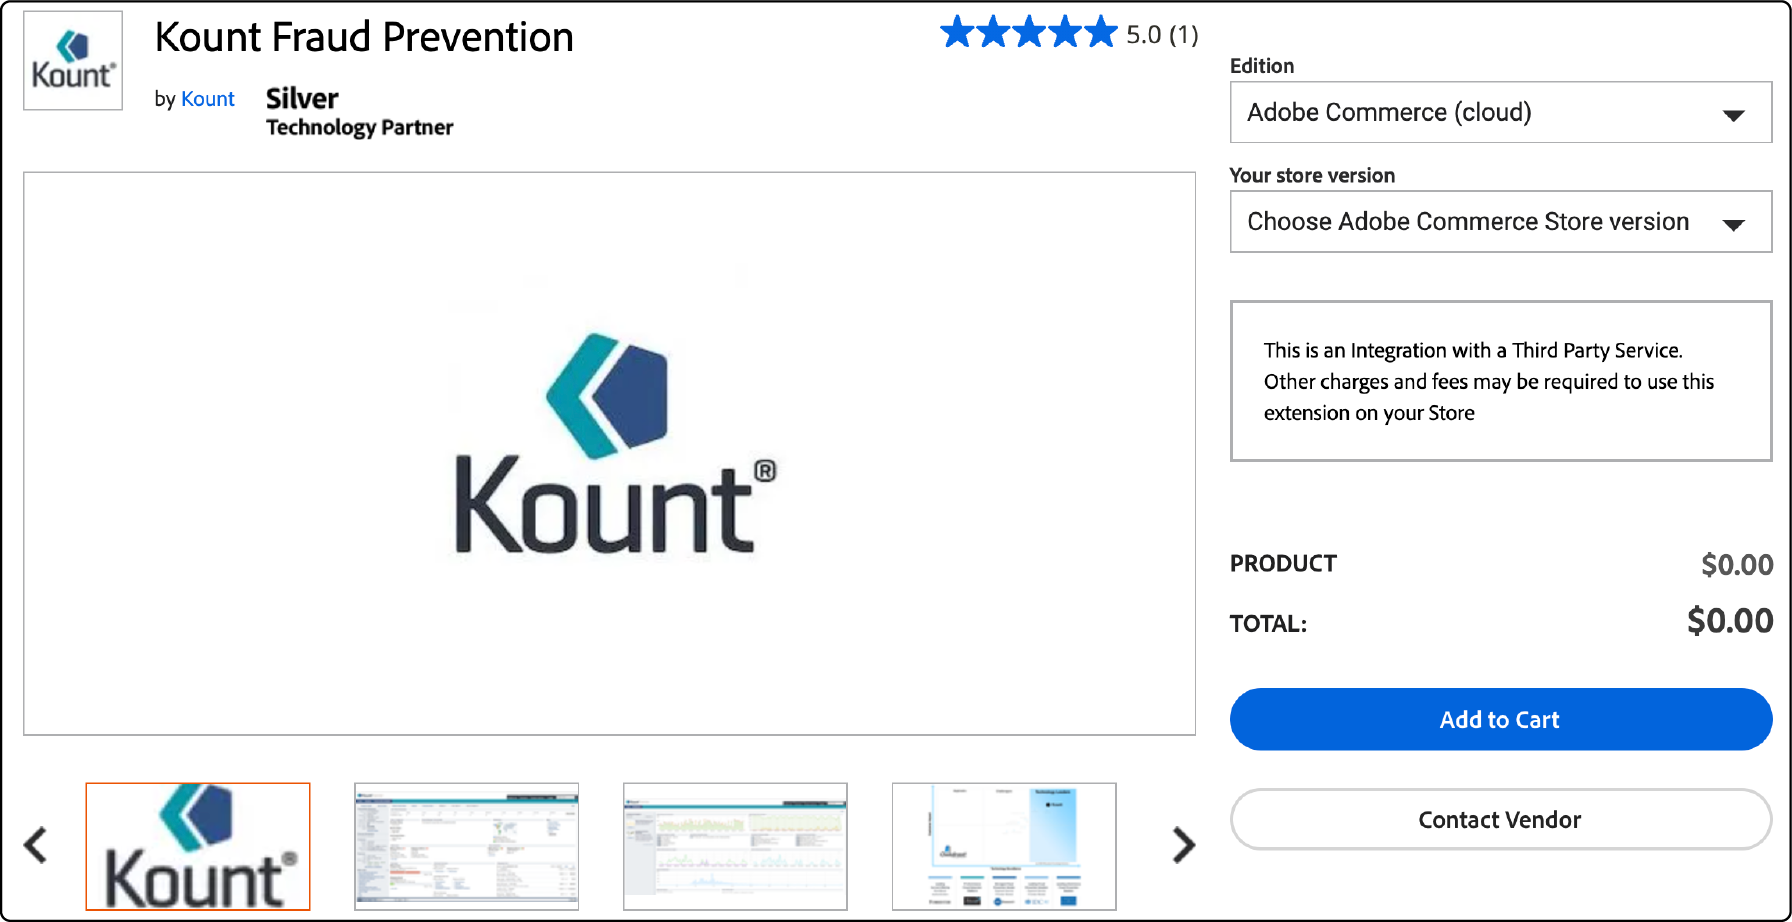 Kount Fraud Prevention for Magento